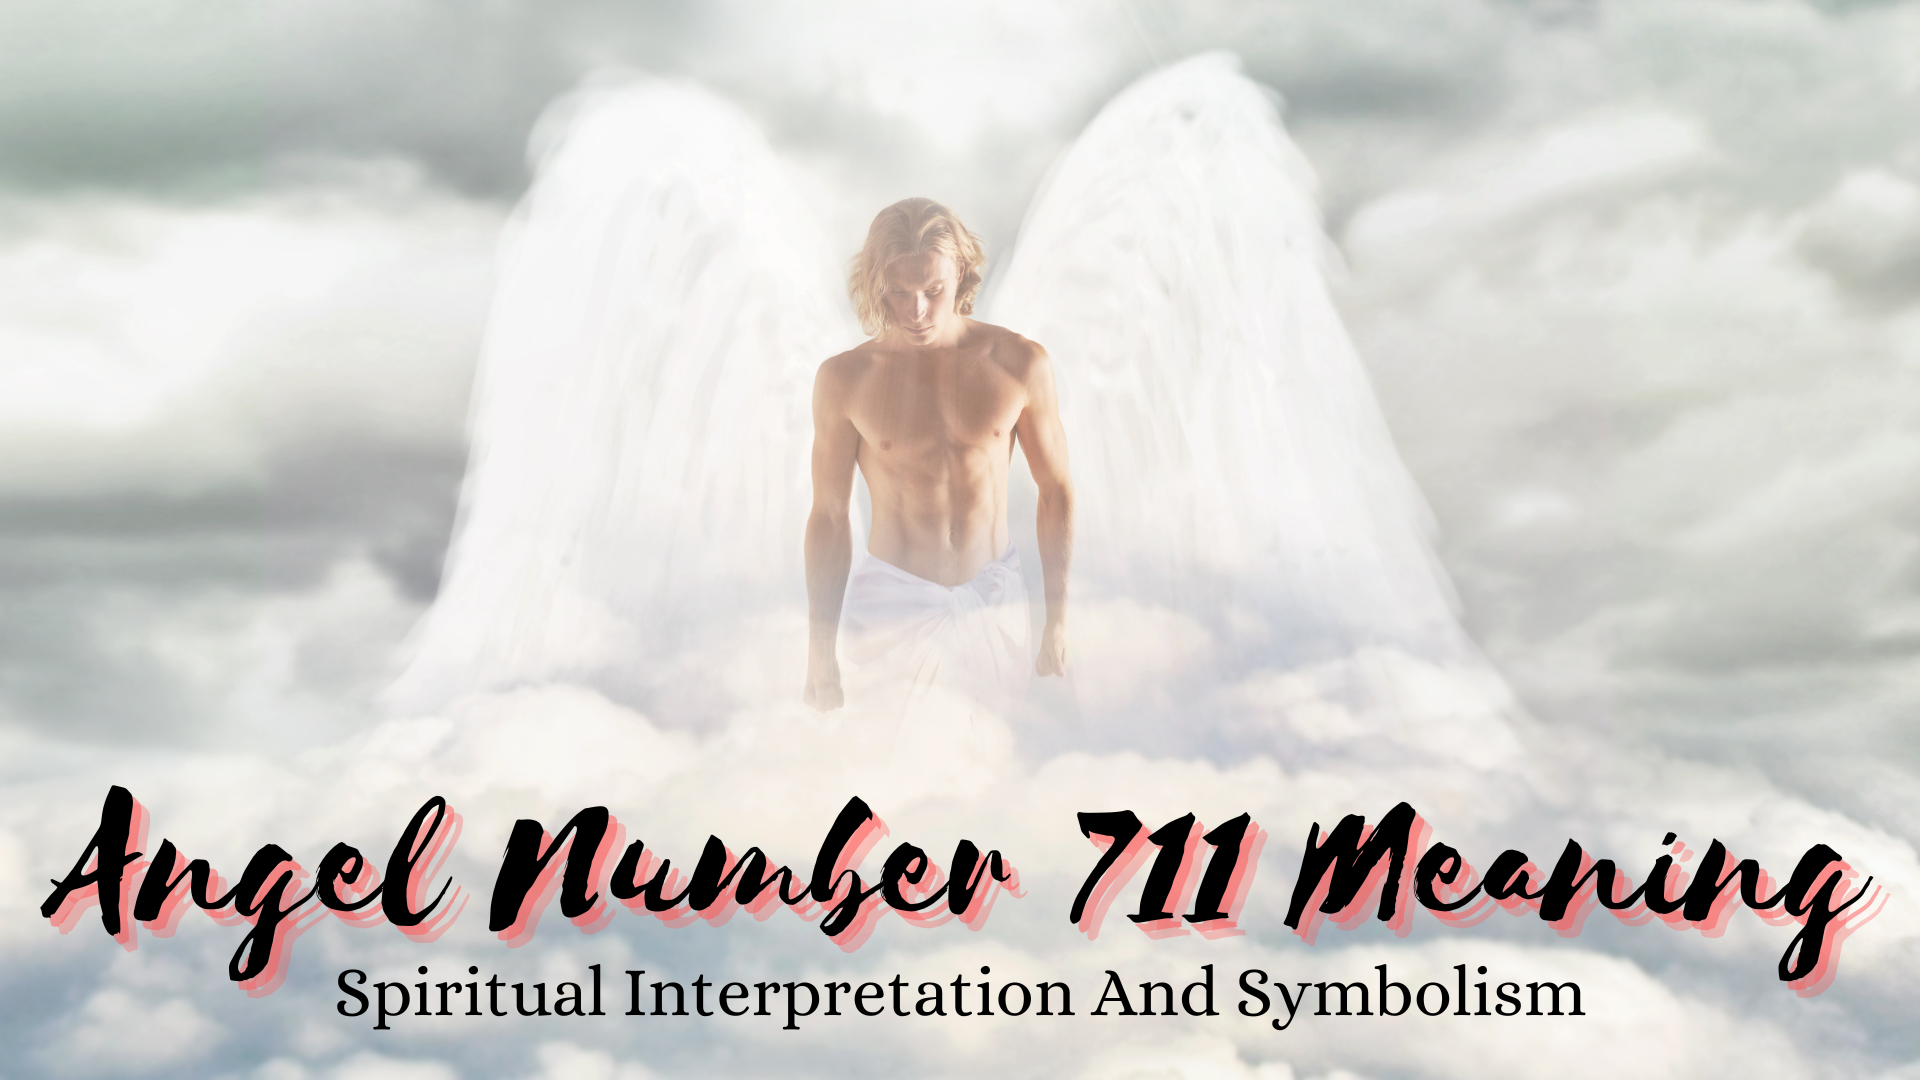 Angel Number 711 Meaning – Spiritual Interpretation And Symbolism